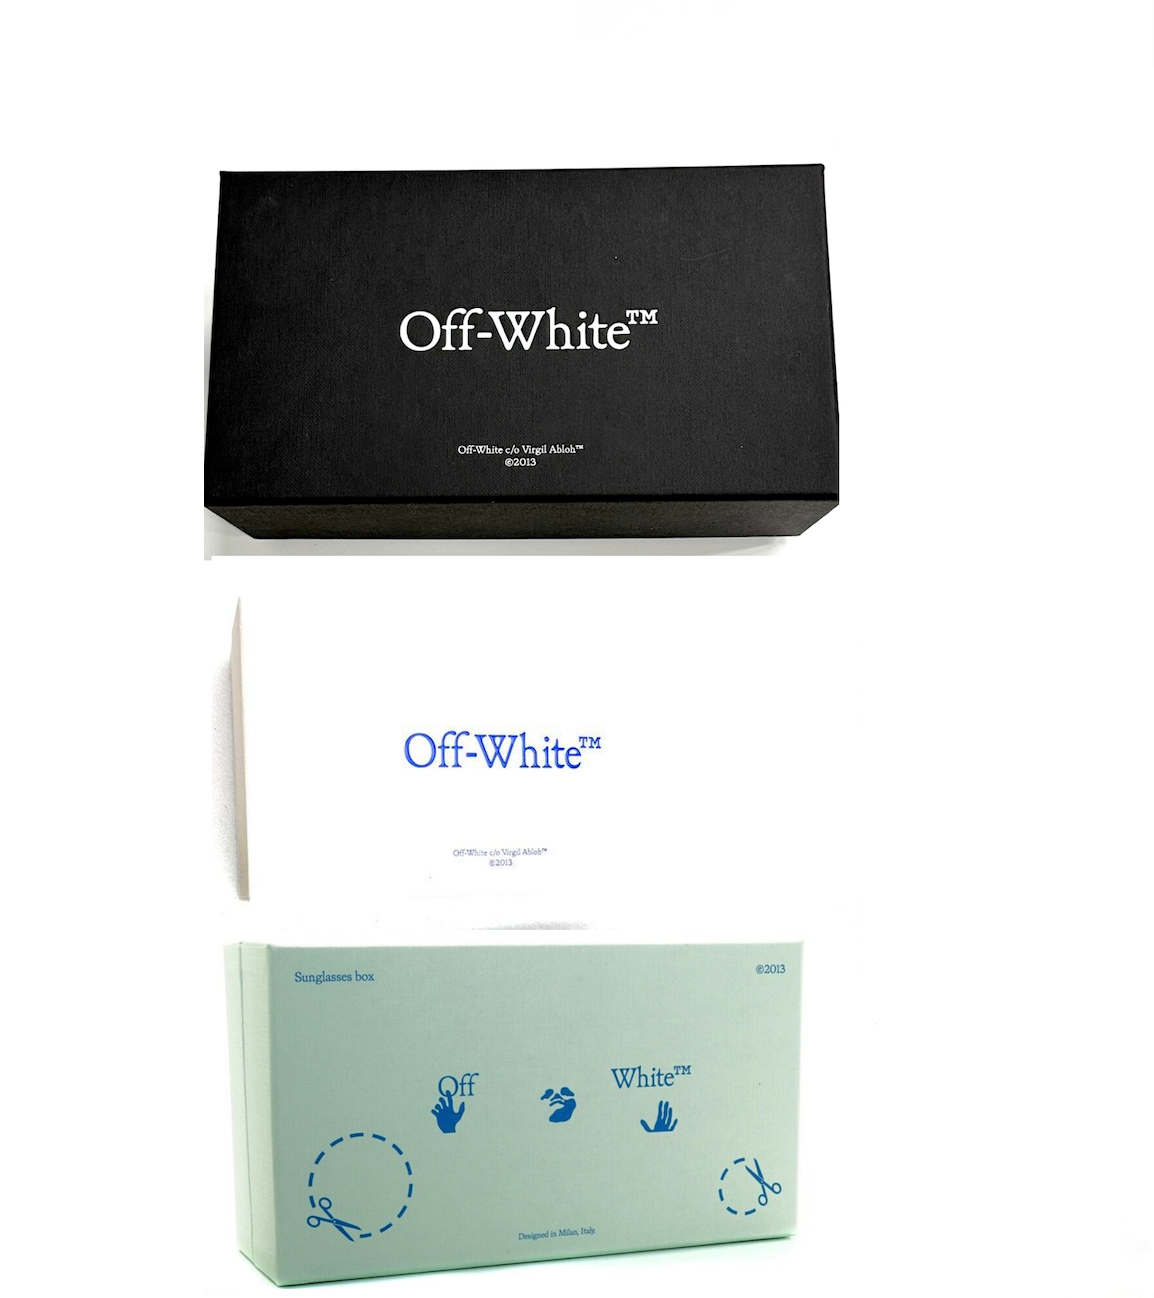 Off-White OERI129S24PLA0011018 54mm New Sunglasses